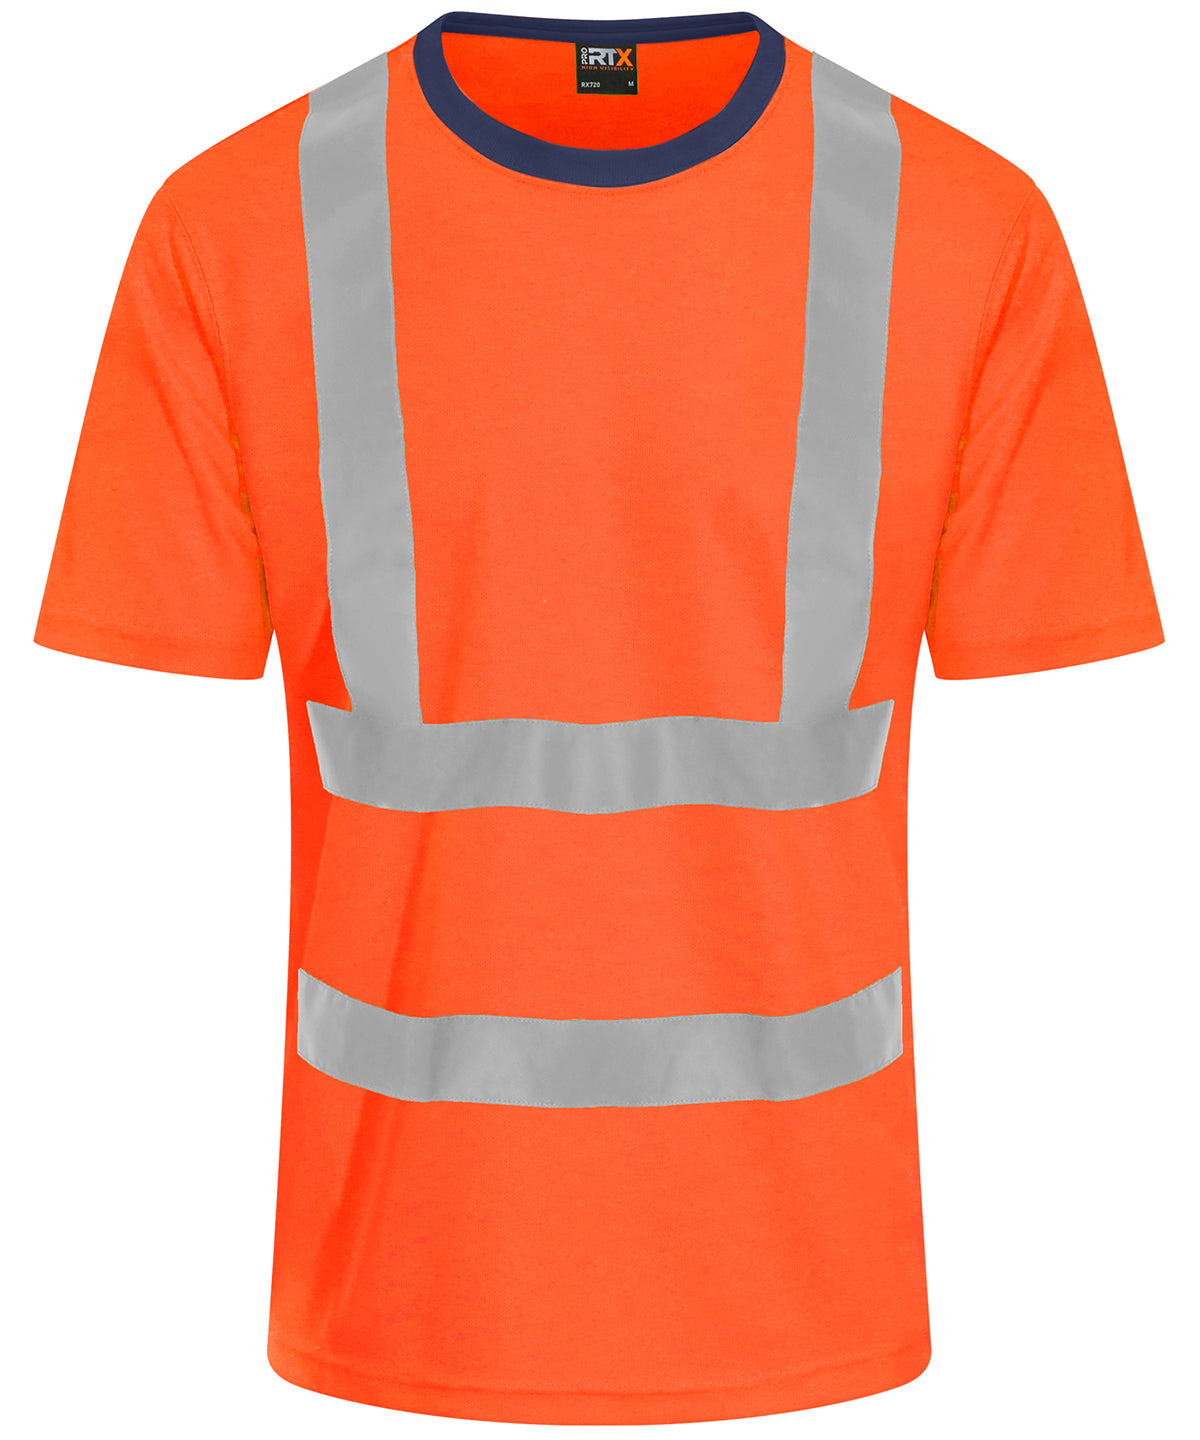 Personalised T-Shirts - Neon Orange ProRTX High Visibility High visibility t-shirt